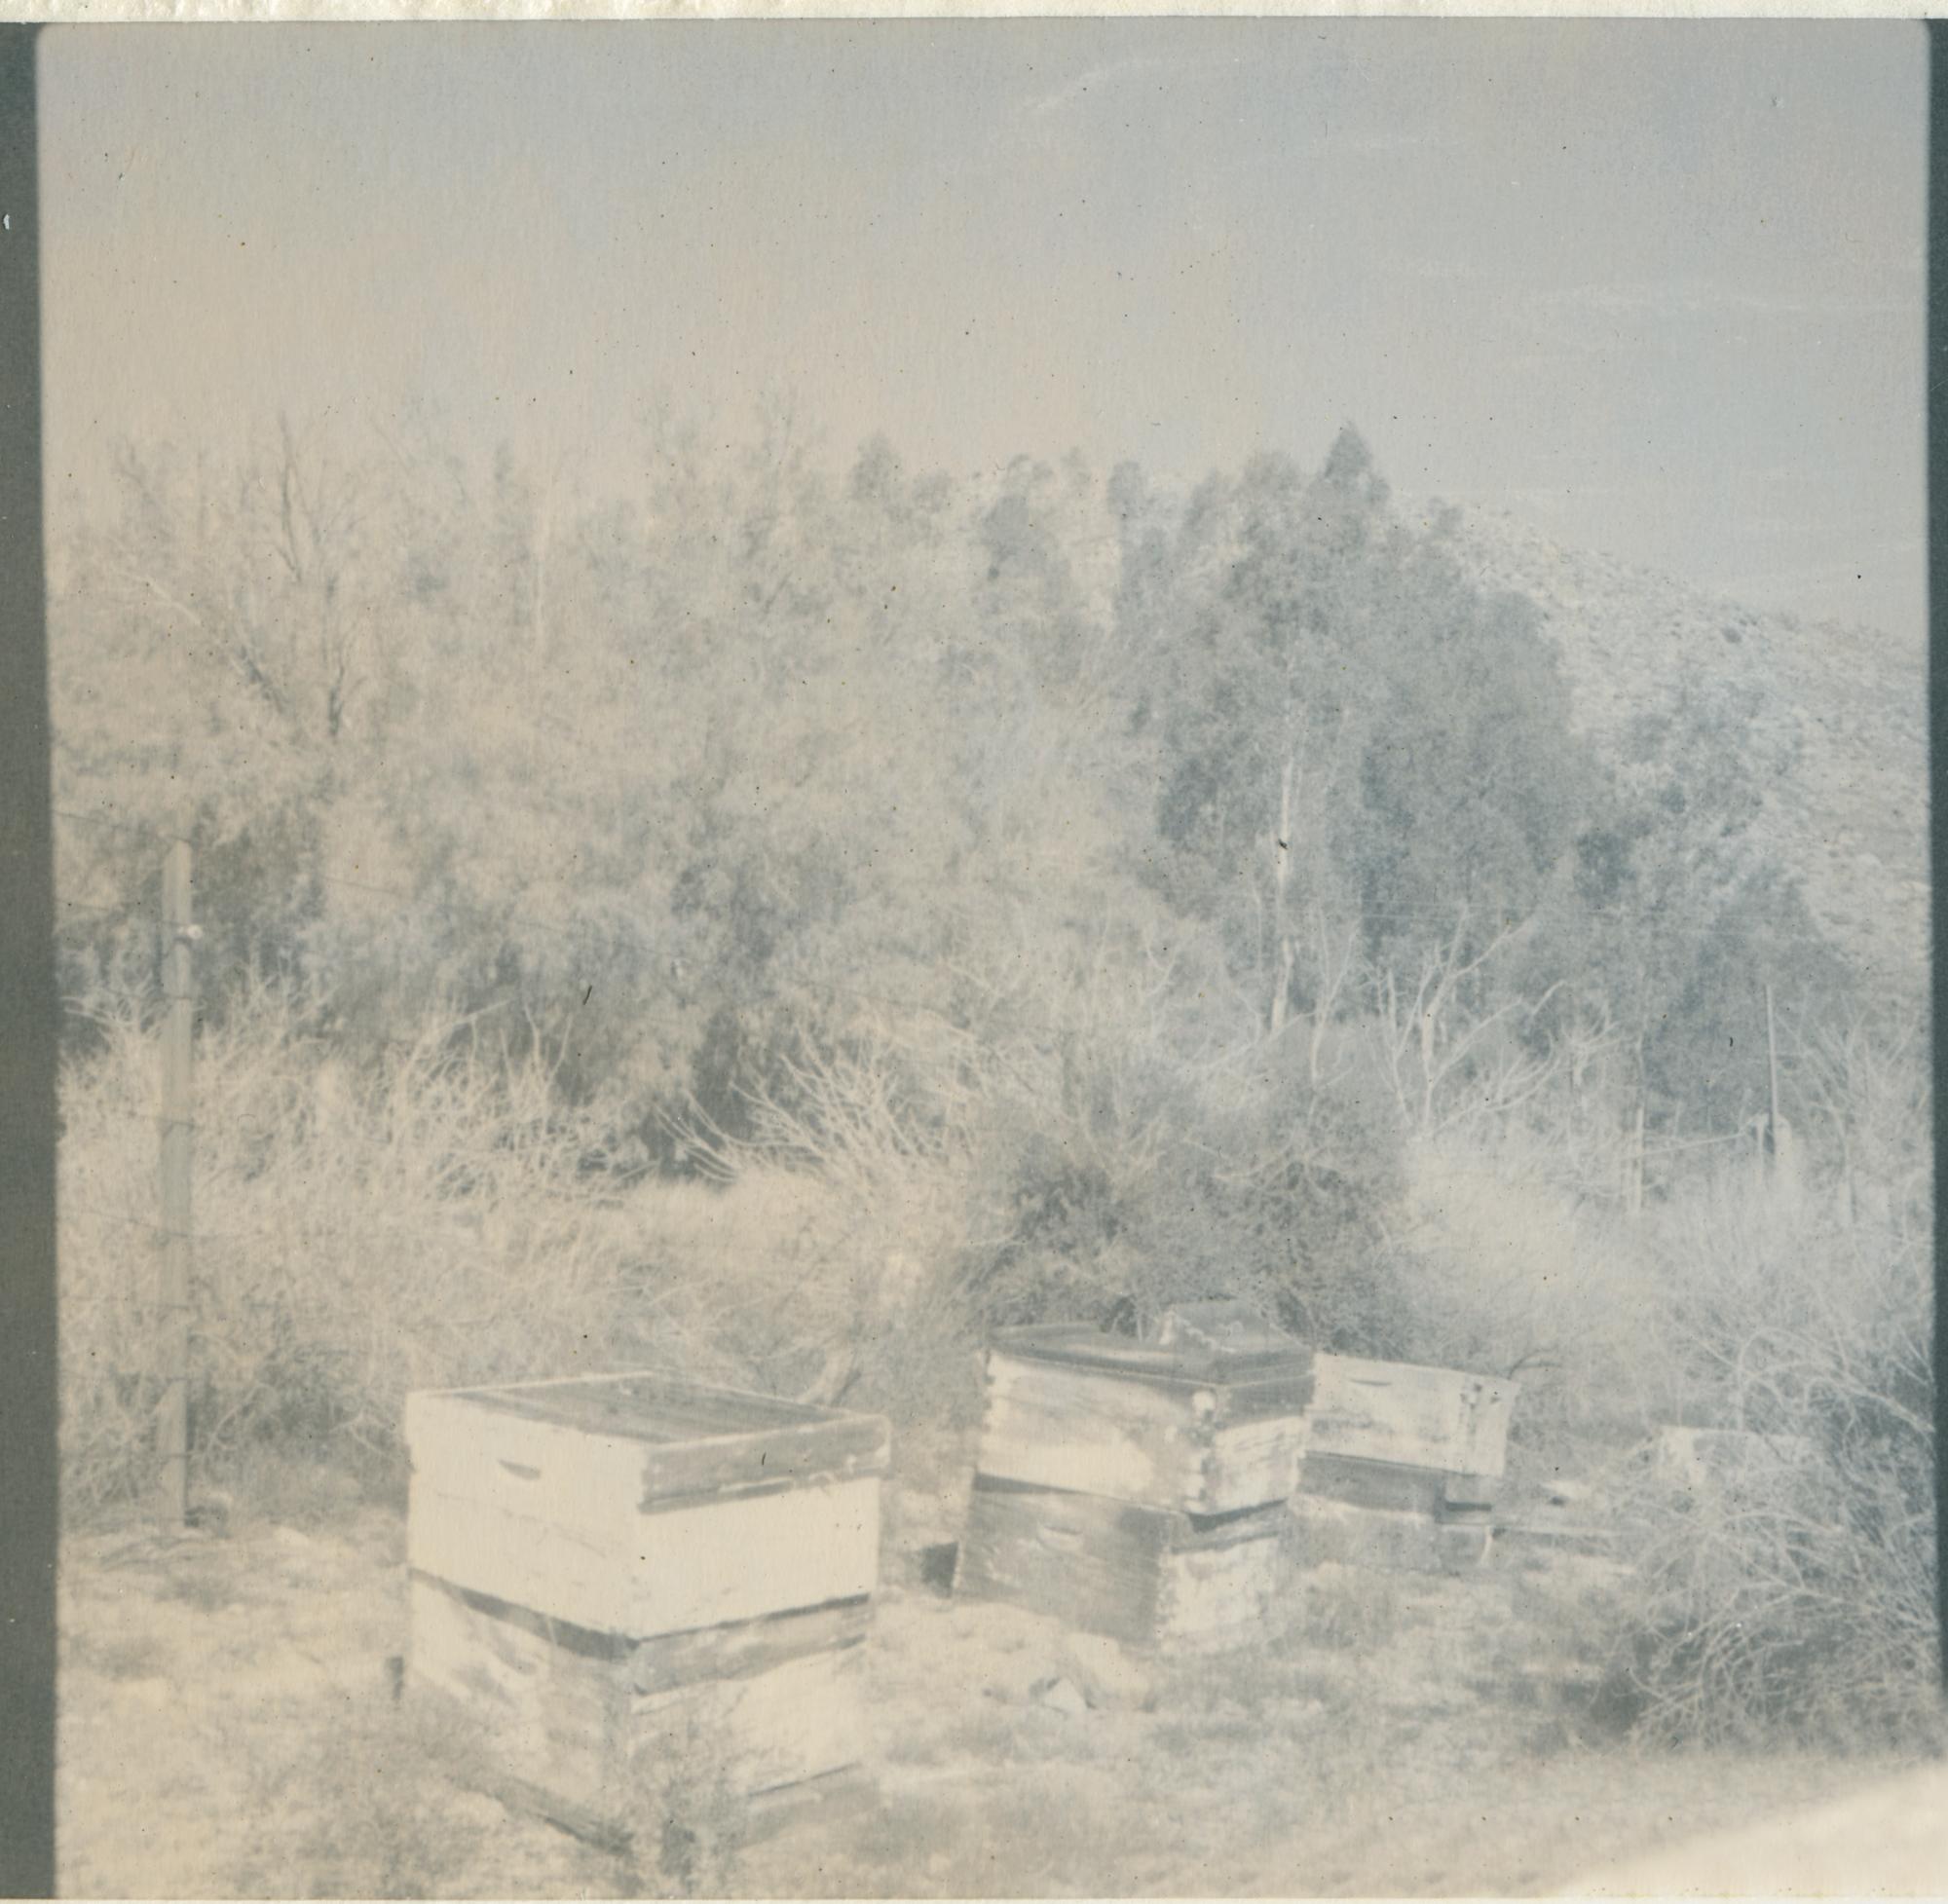 Stefanie Schneider Landscape Photograph - Deserted Bee Boxes (California Dreaming) - Contemporary, 21st Century, Polaroid